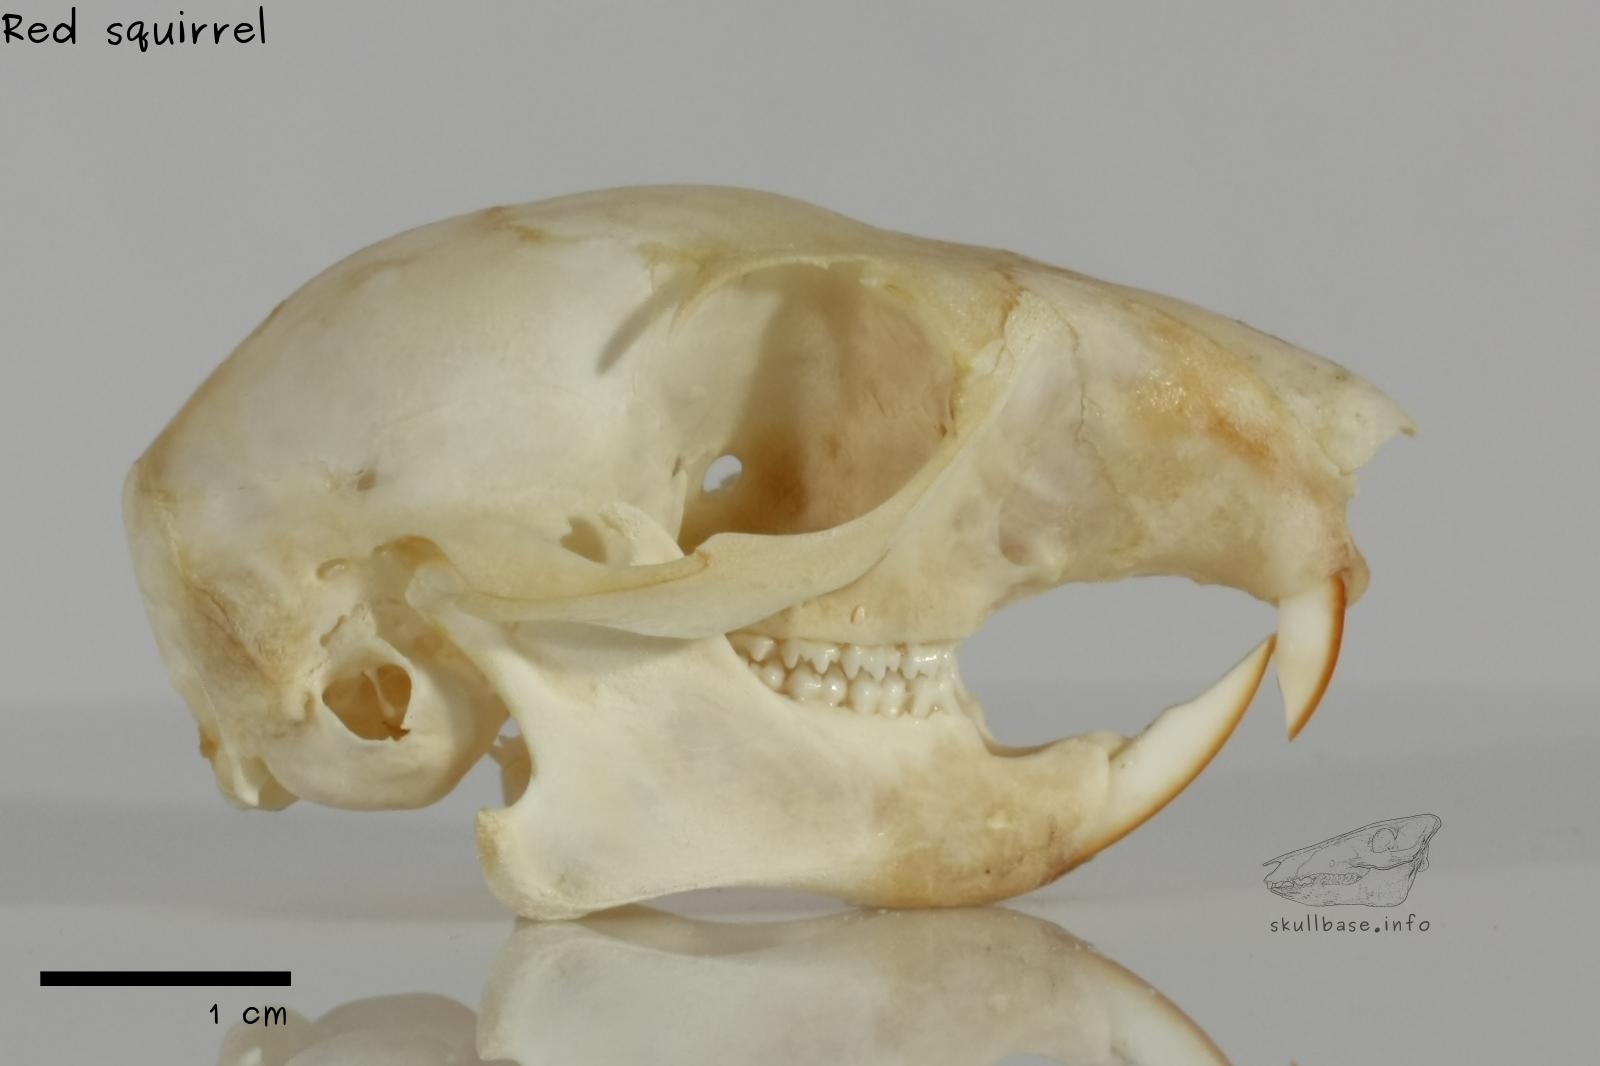 Red squirrel (Sciurus vulgaris) skull lateral view